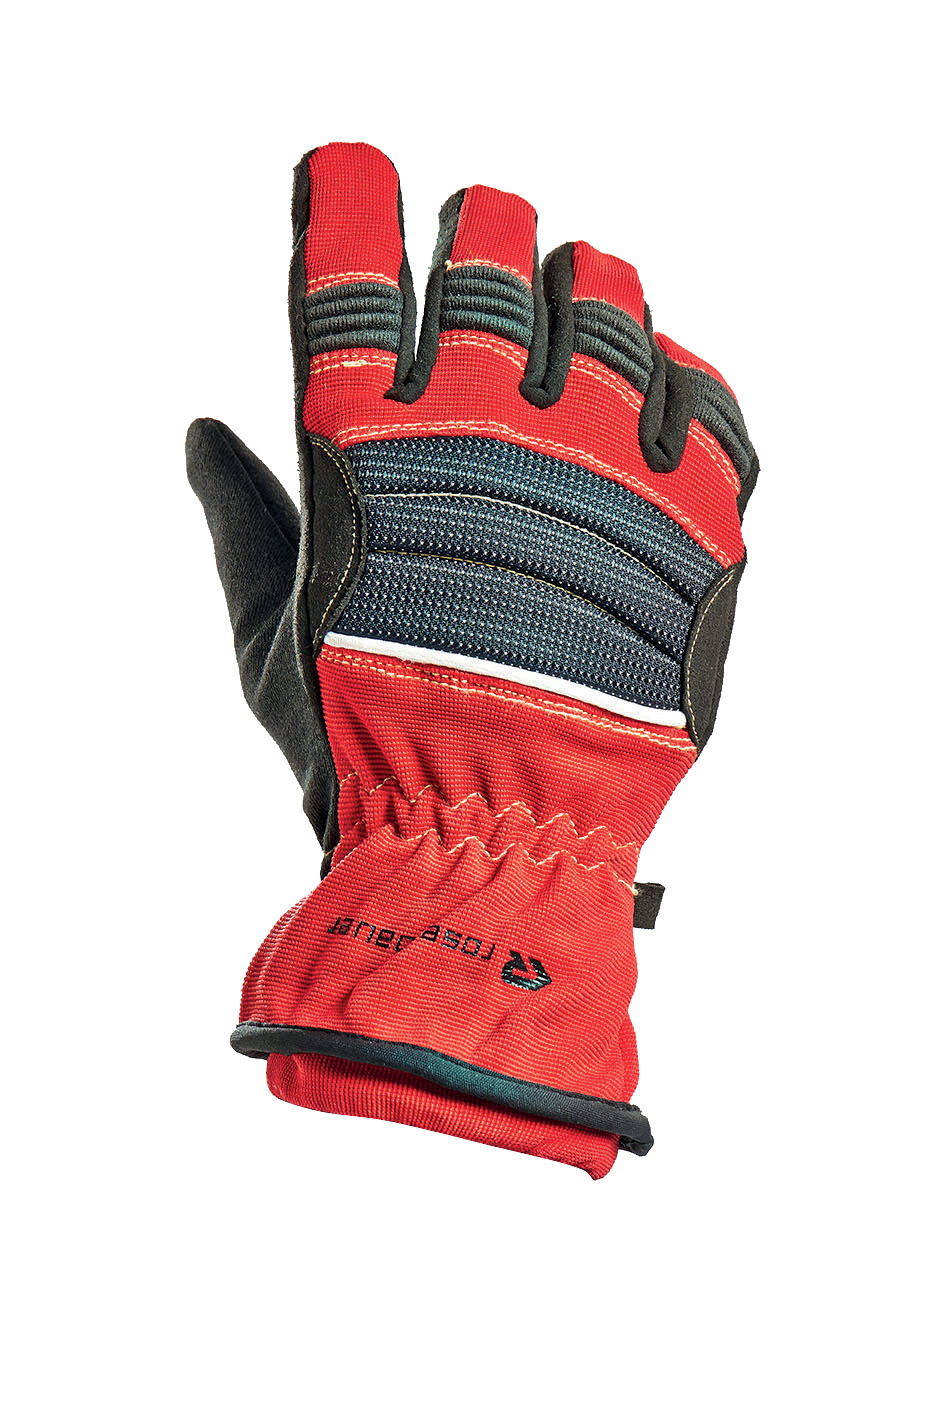 Rosenbauer TH-Handschuh GLOROS T1, Stulpe, rot/schwarz